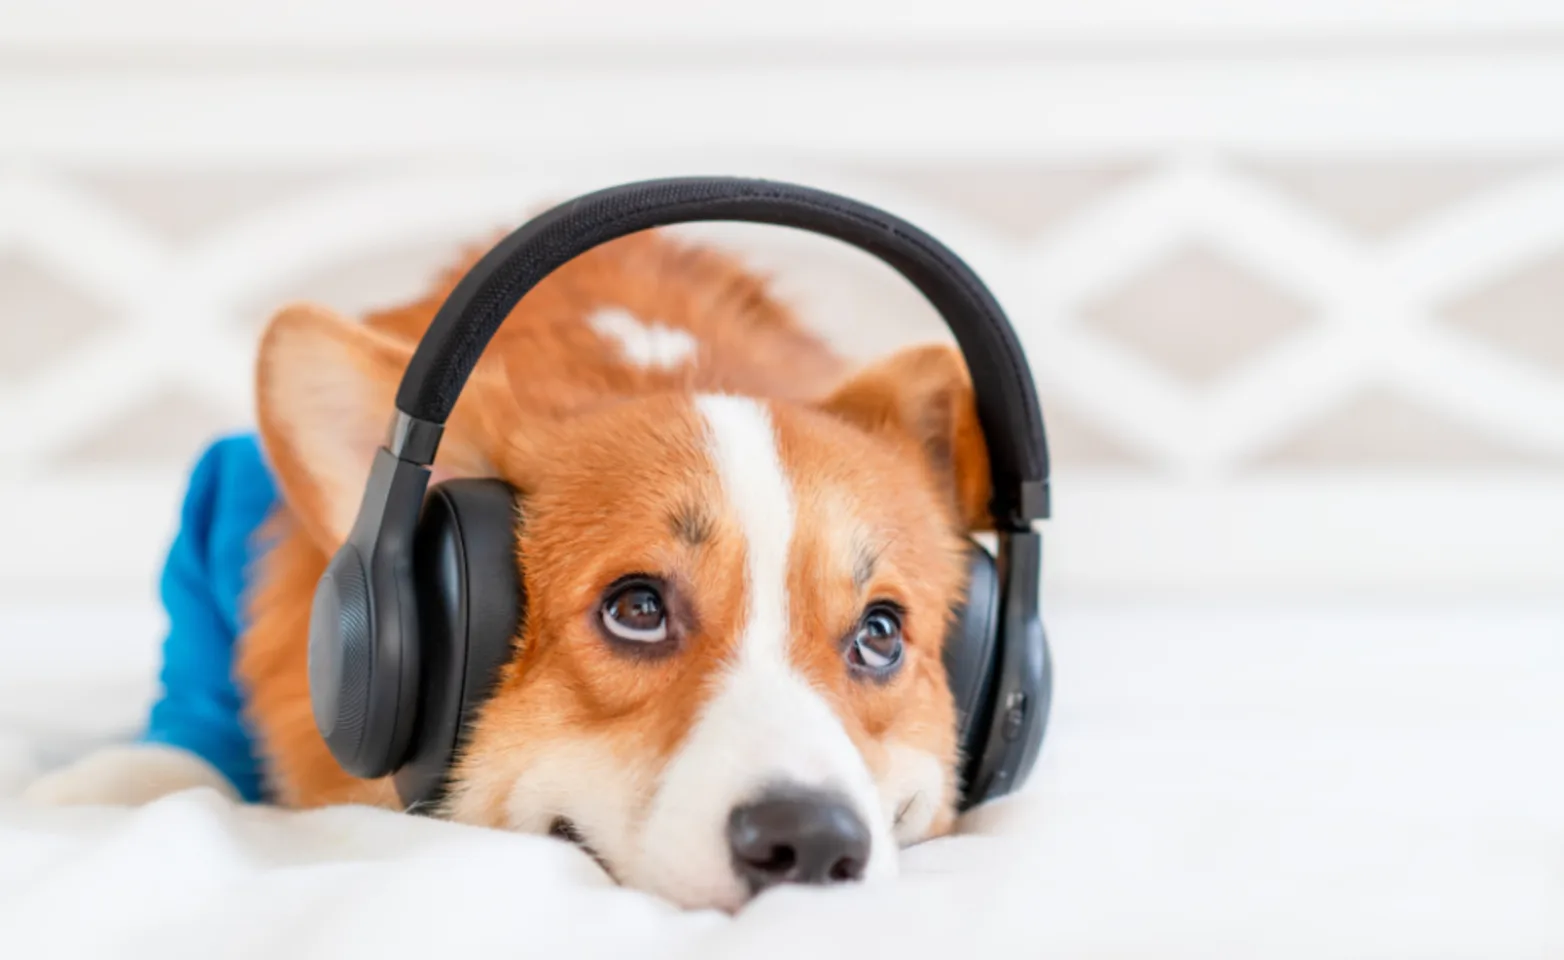 Corgi (Dog) Listening to Music with Headphones